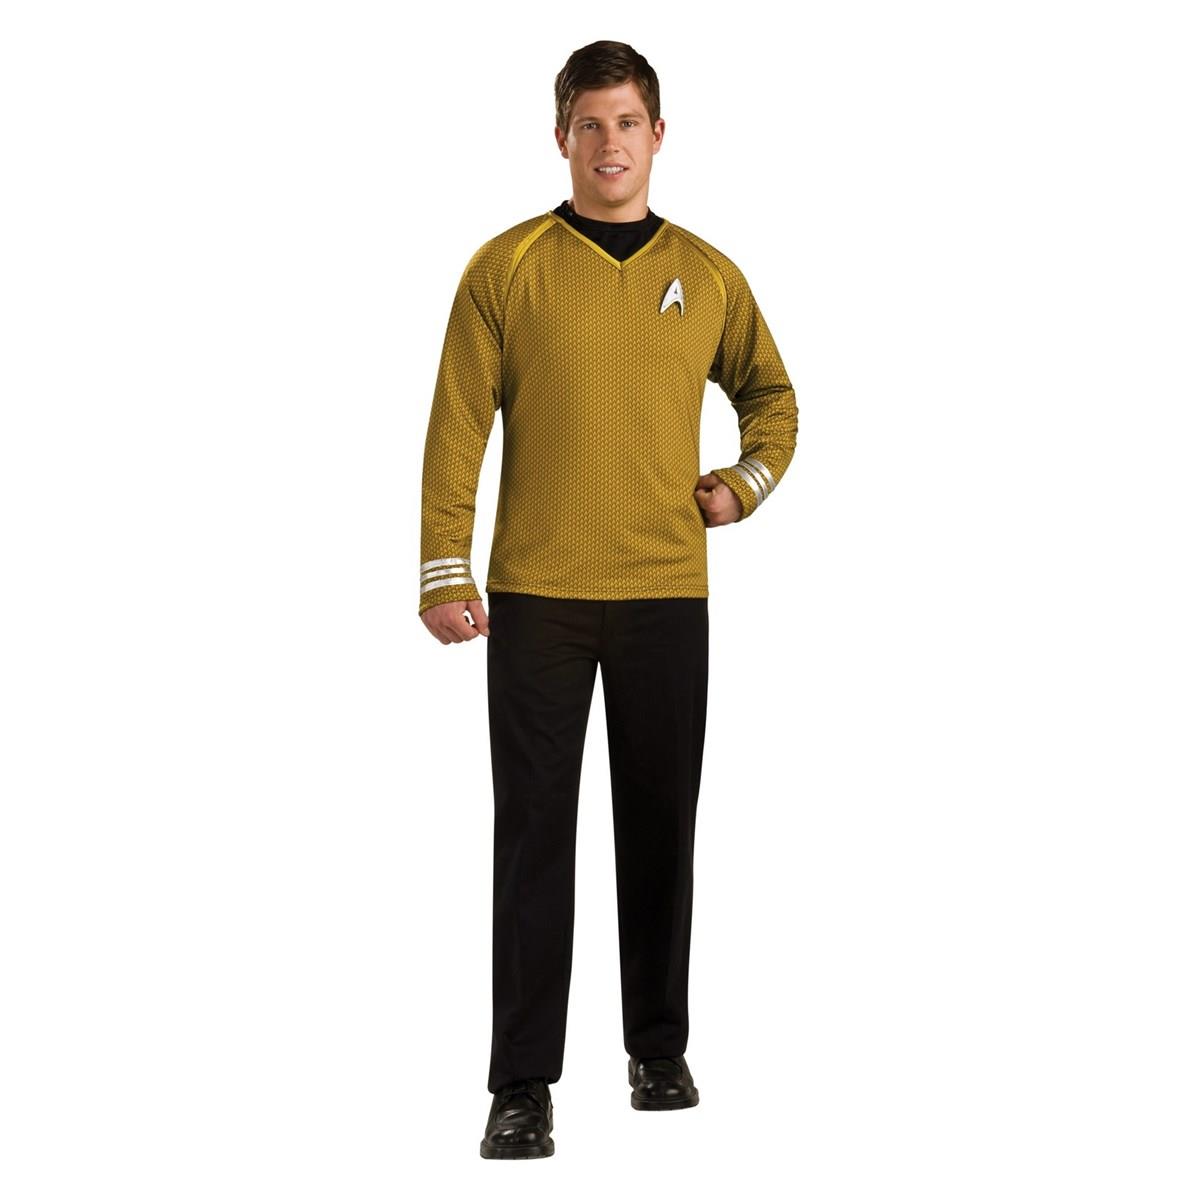 Picture of Rubies Costumes 284406 Halloween Star Trek Mens Grand Heritage Captain Kirk Costume - Small